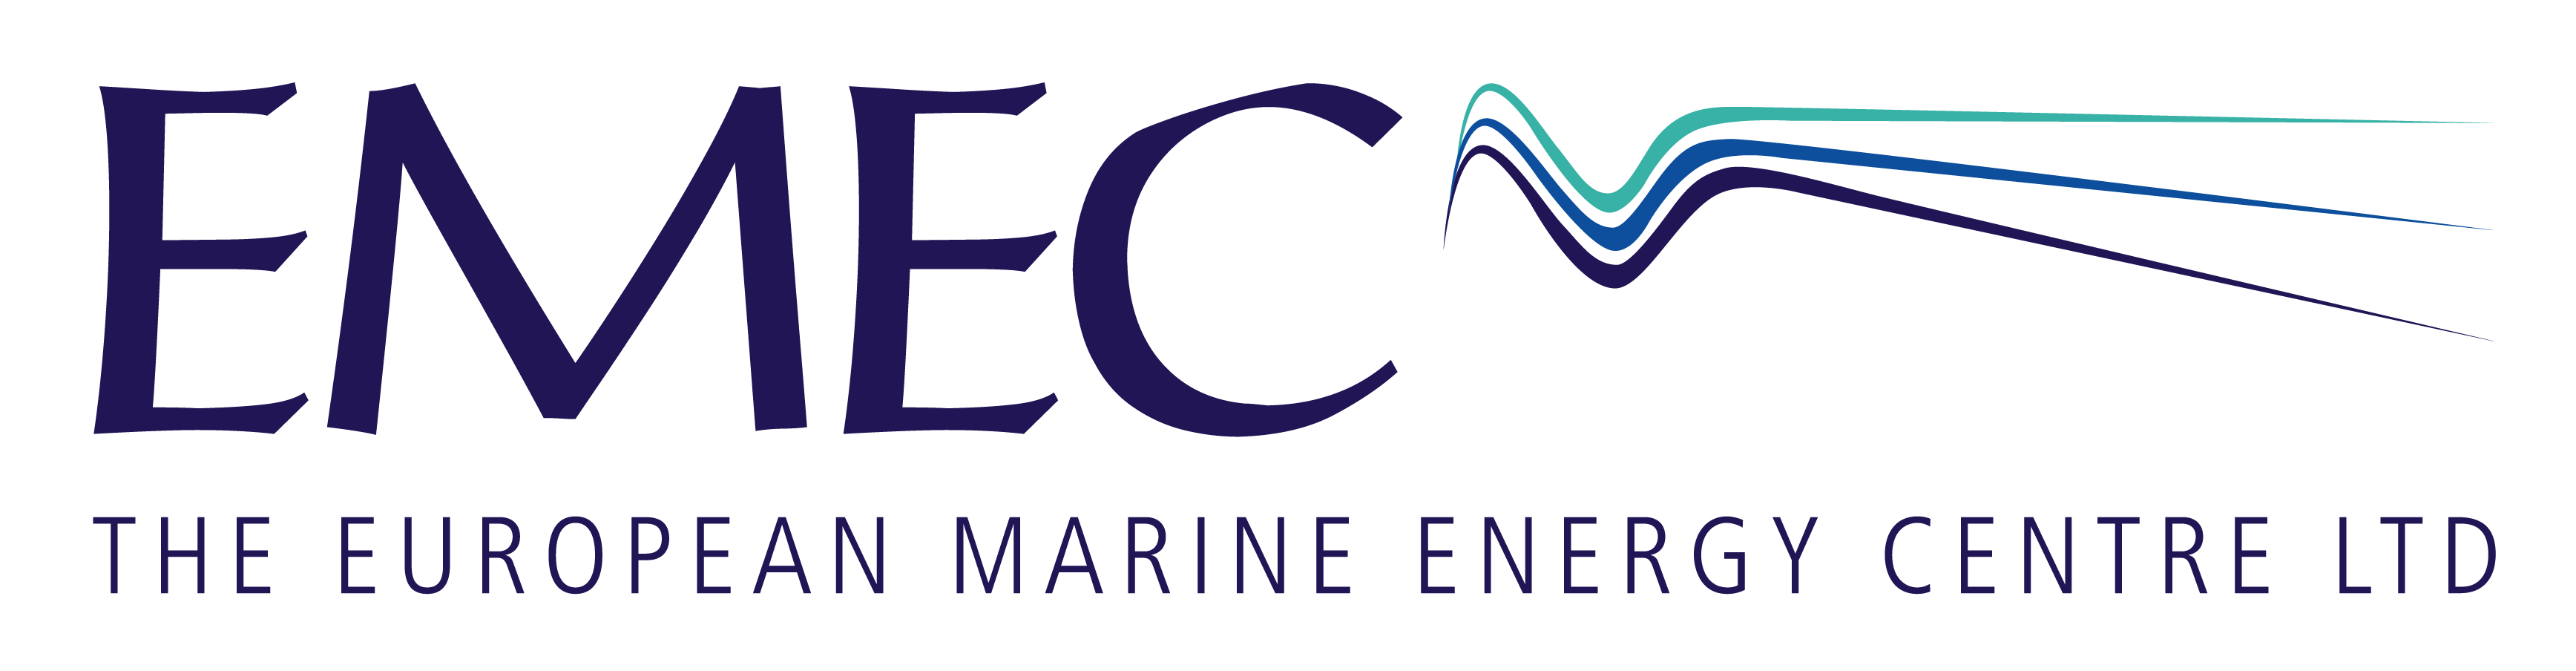 Organisation Logo - European Marine Energy Centre Ltd